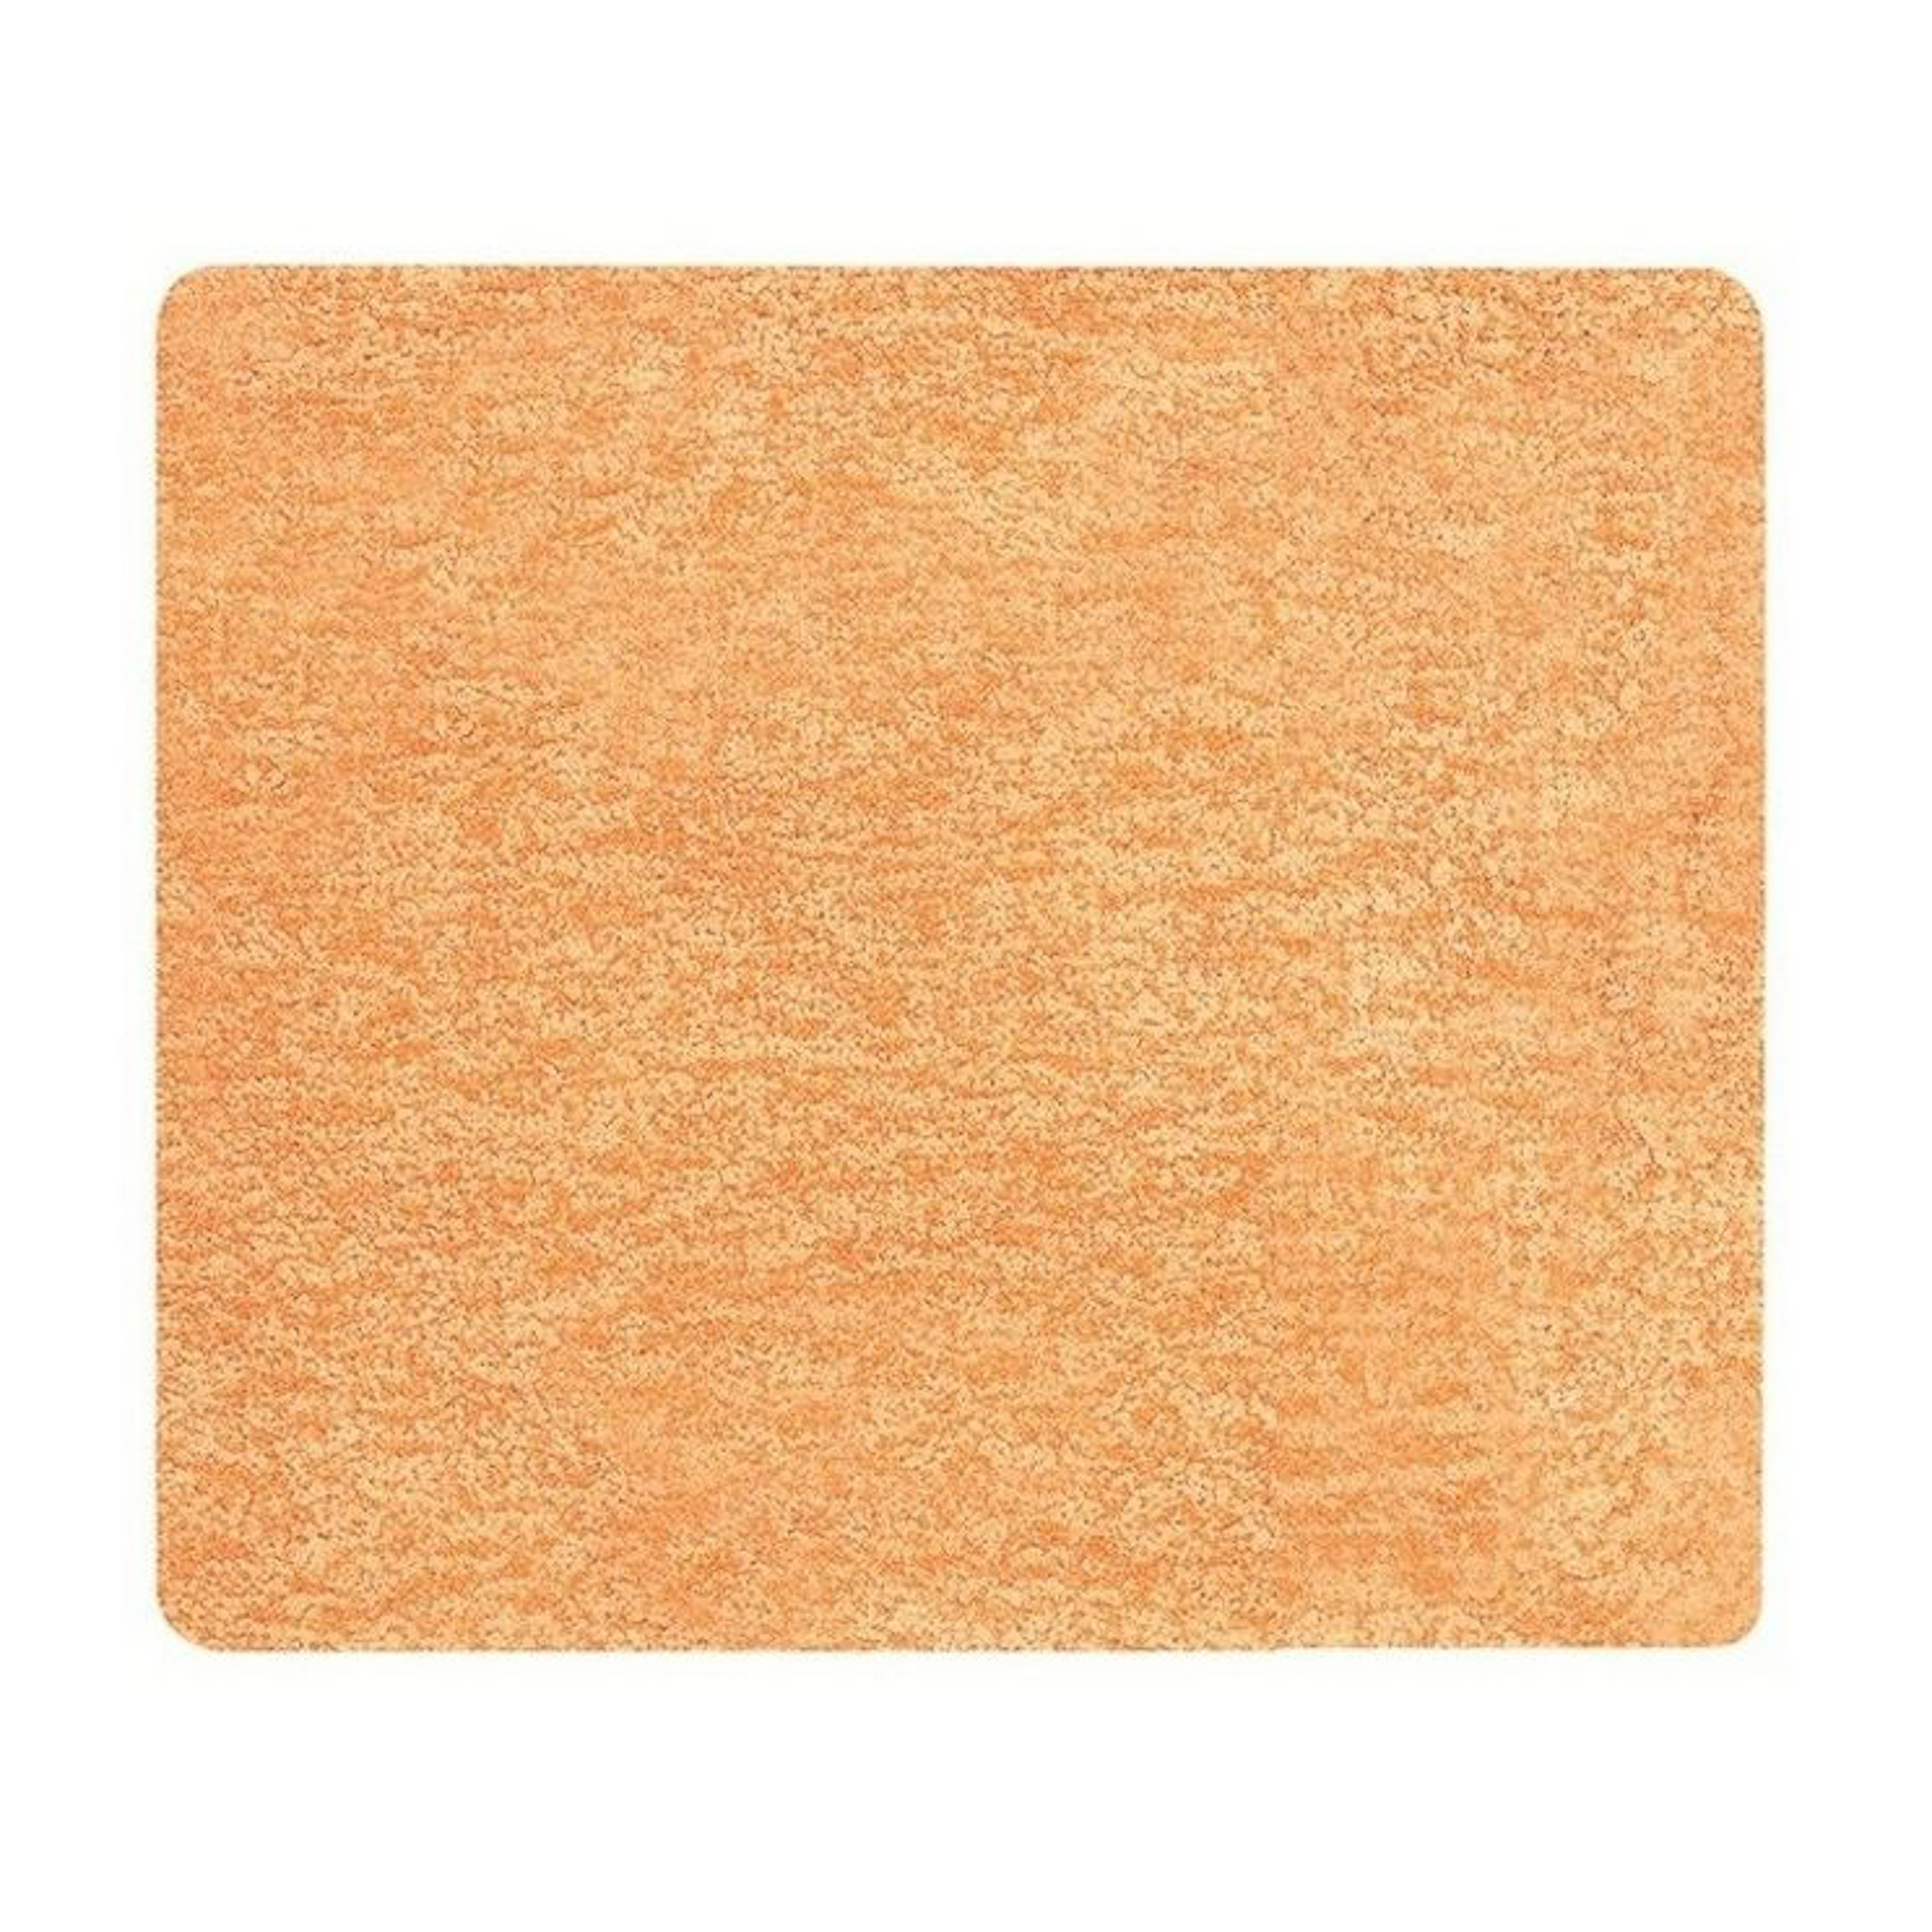 фото Коврик для ванной spirella gobi оранжевый 55х65 см